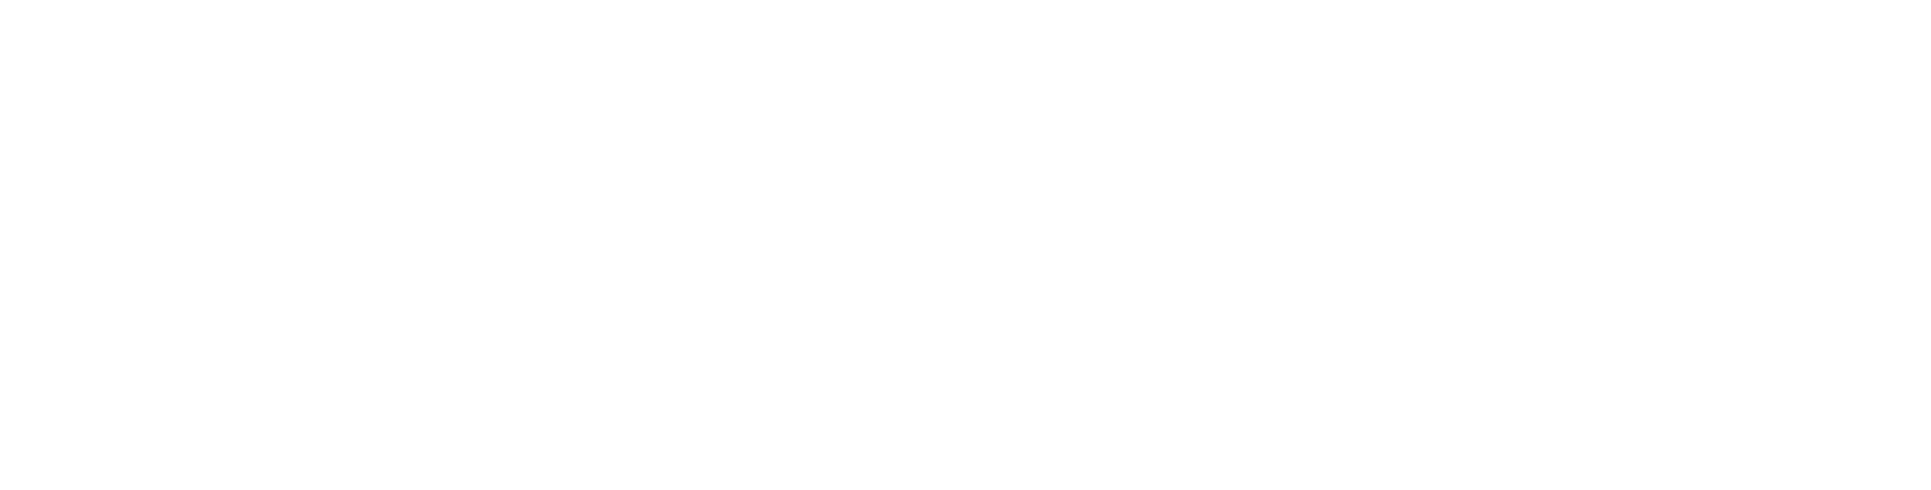 wifisatv logo